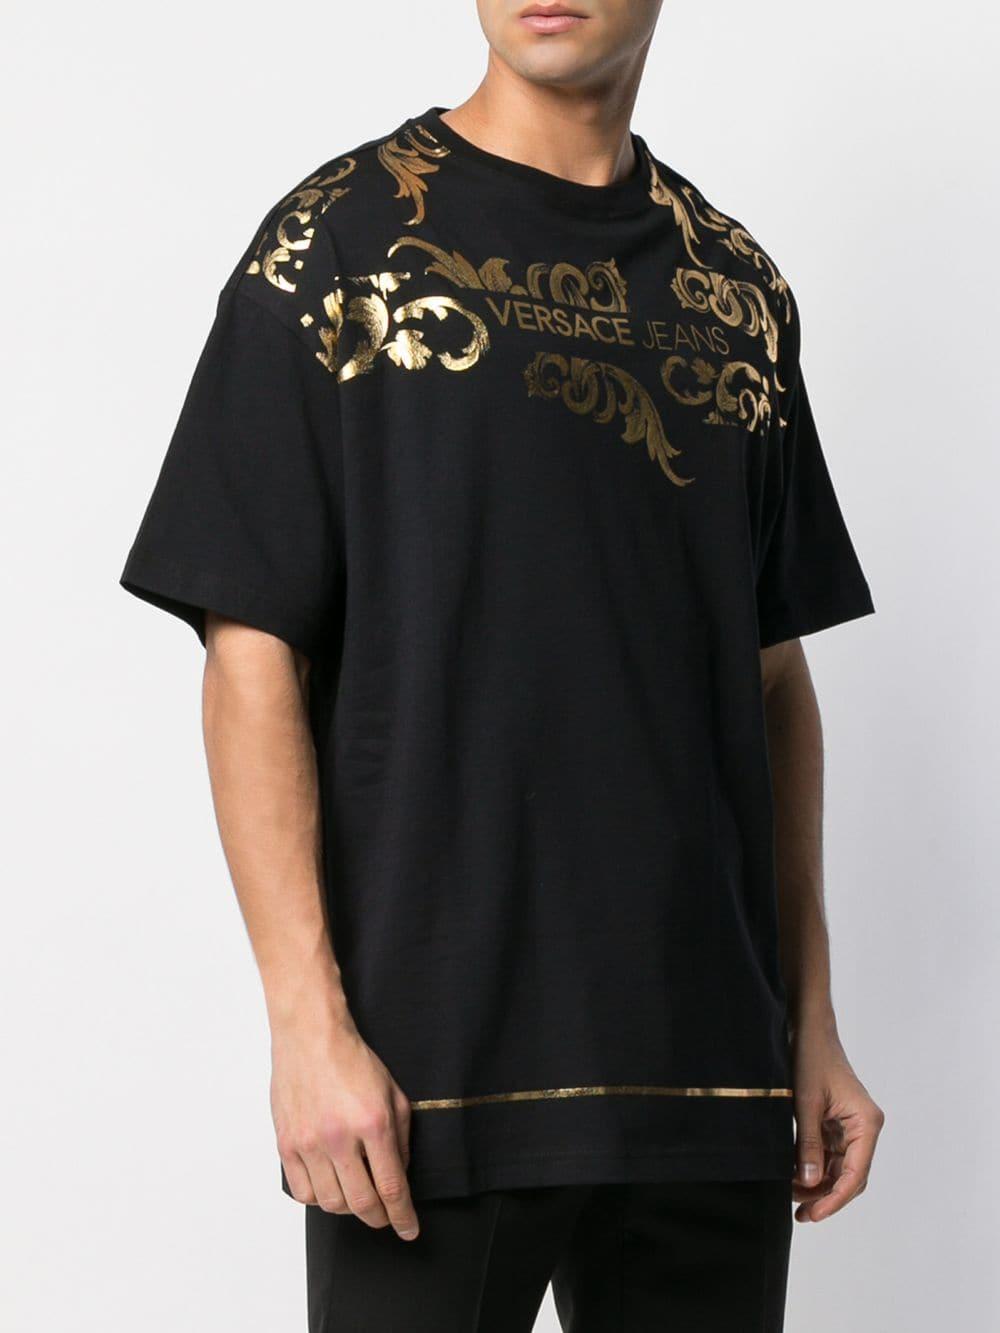 Versace Jeans Cotton Foiled Baroque Logo T-shirt in Black for Men - Lyst